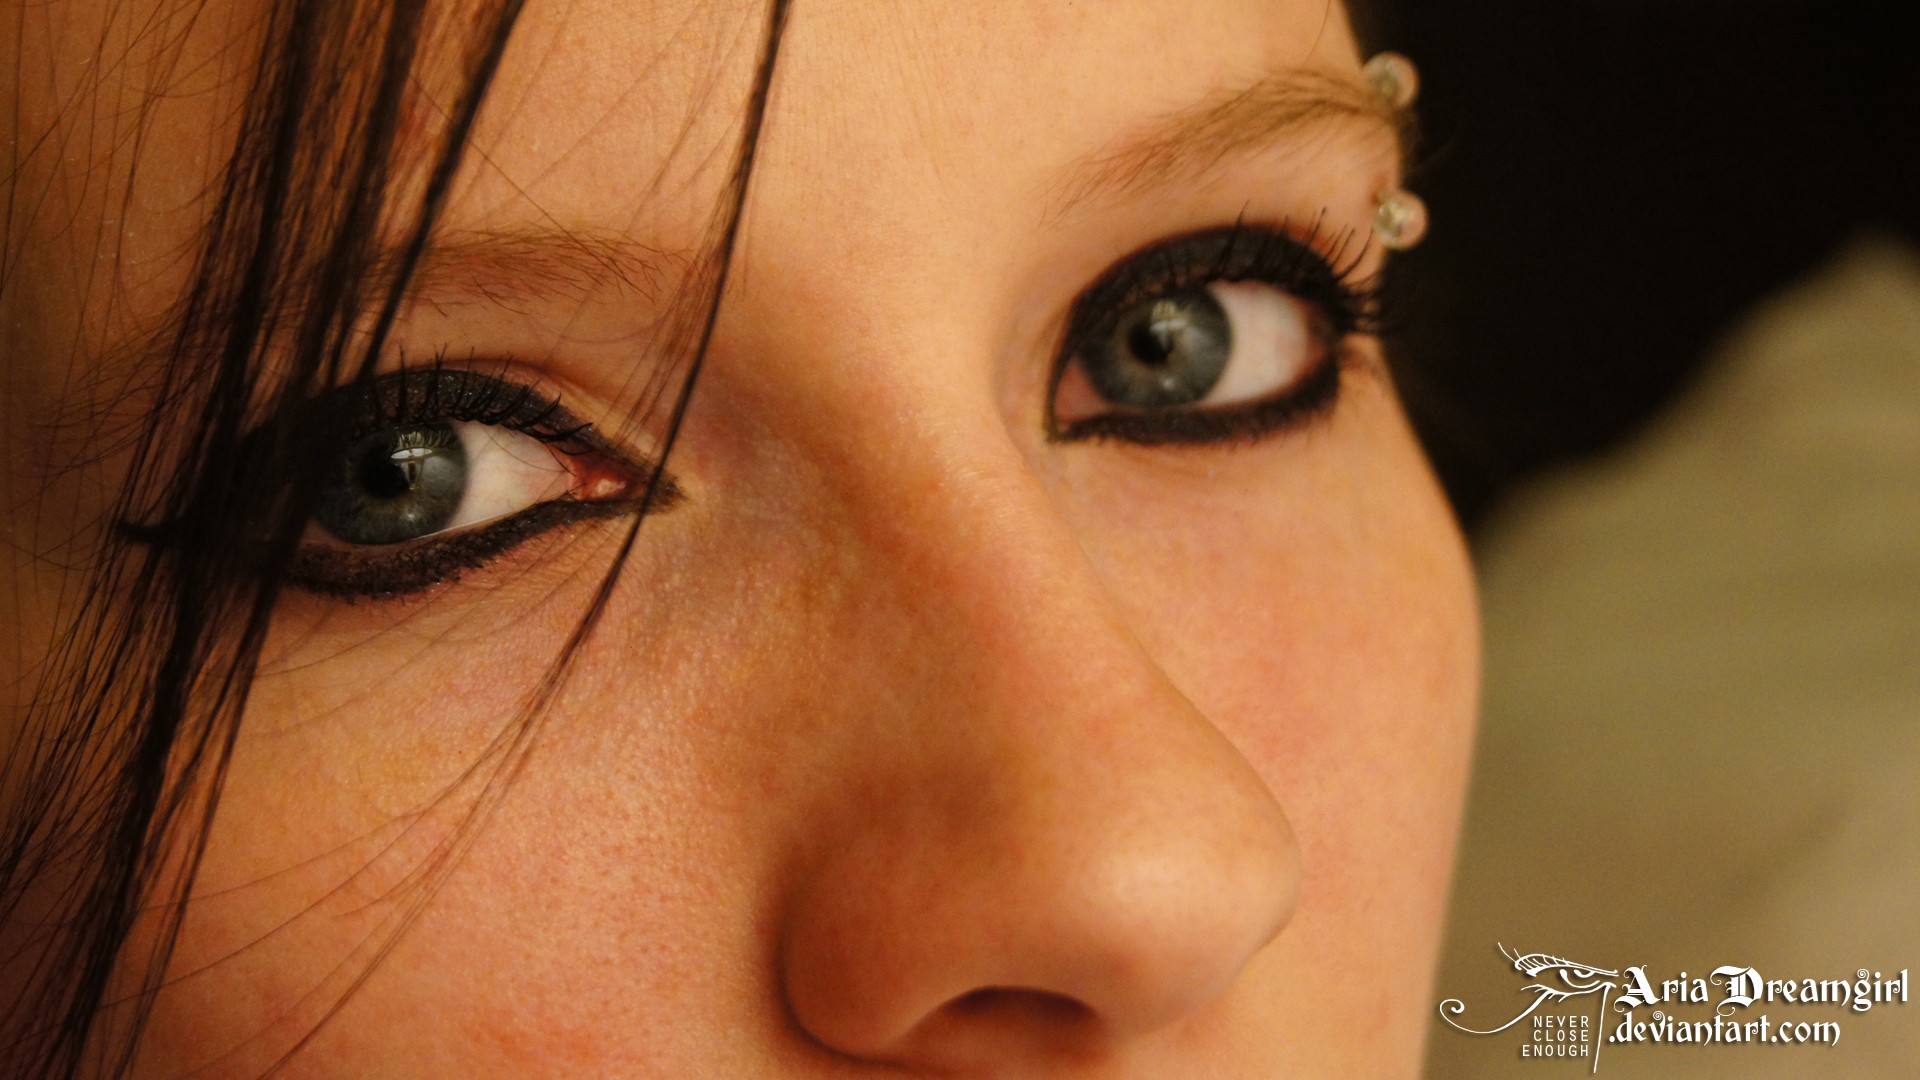 People 1920x1080 Aria Dreamgirl women closeup pierced eyebrow face eyes looking at viewer piercing model watermarked